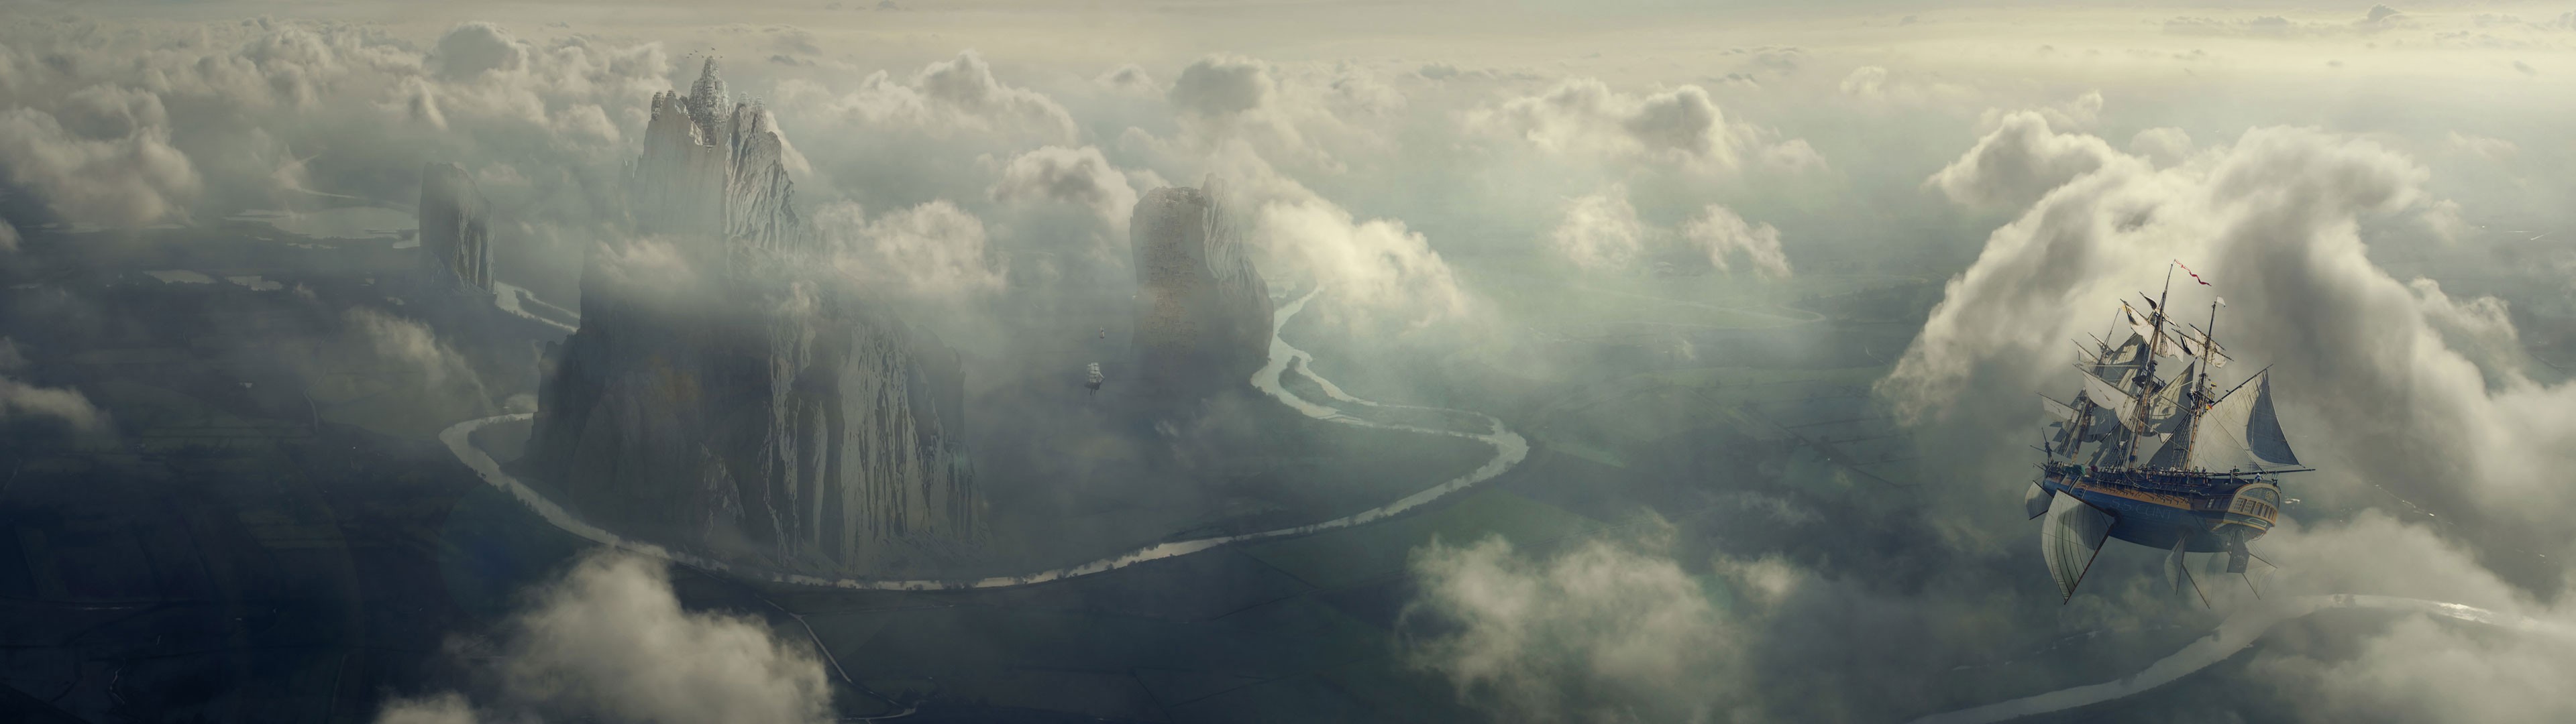 General 3840x1080 airships digital art artwork fantasy art clouds landscape vehicle